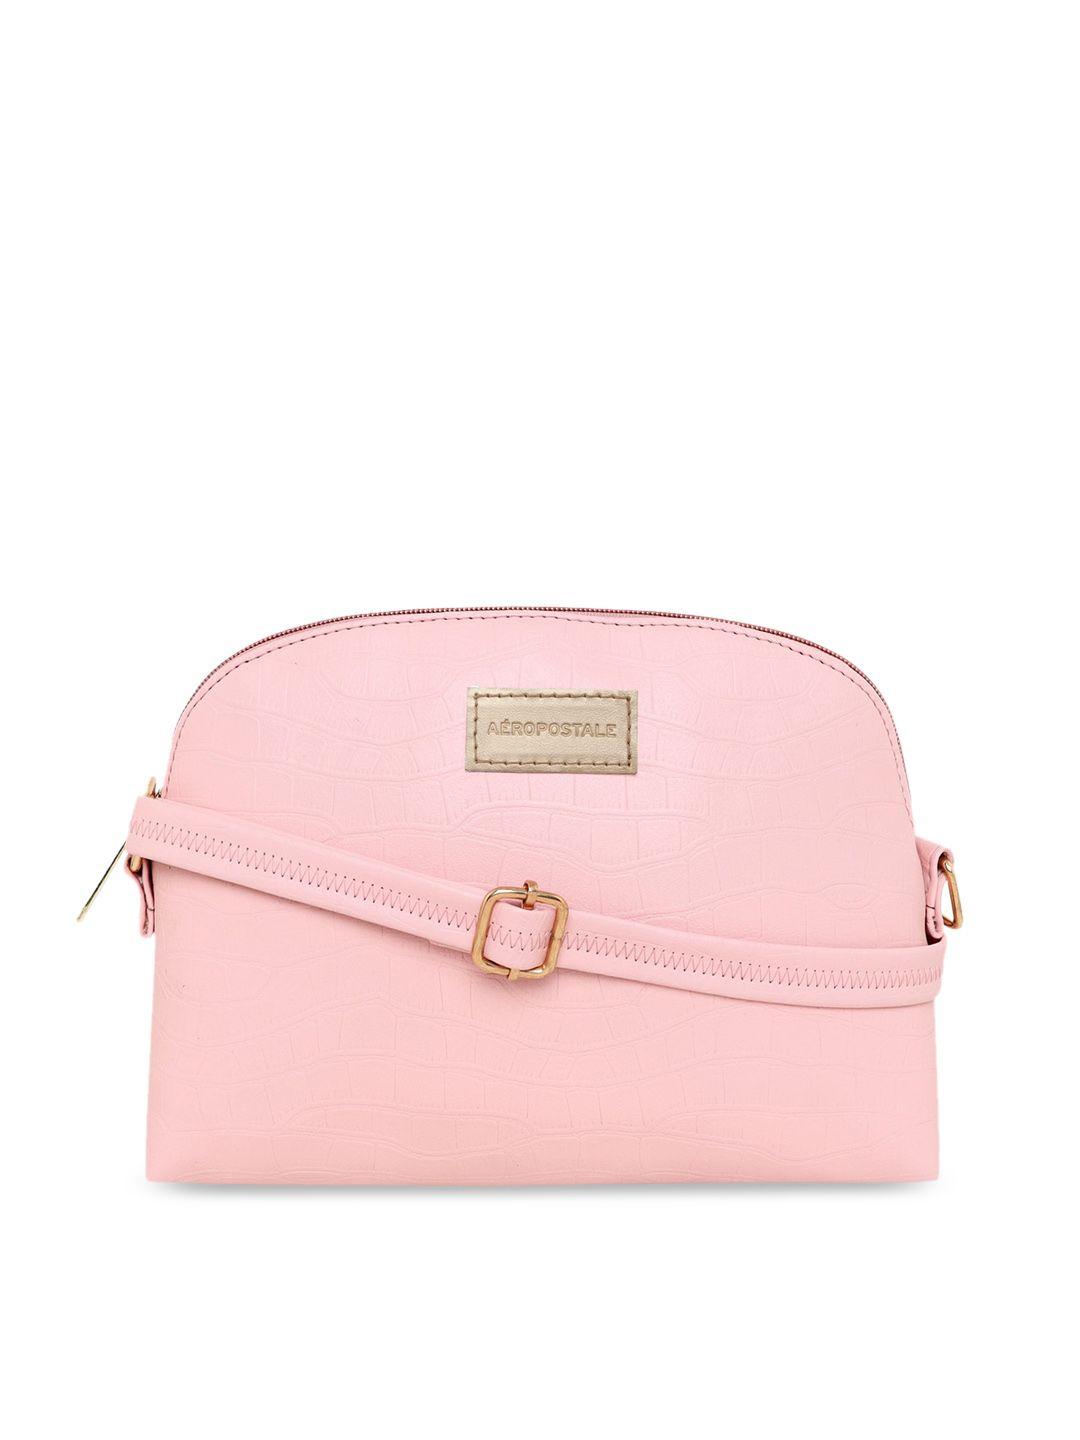 aeropostale pink pu structured handheld bag